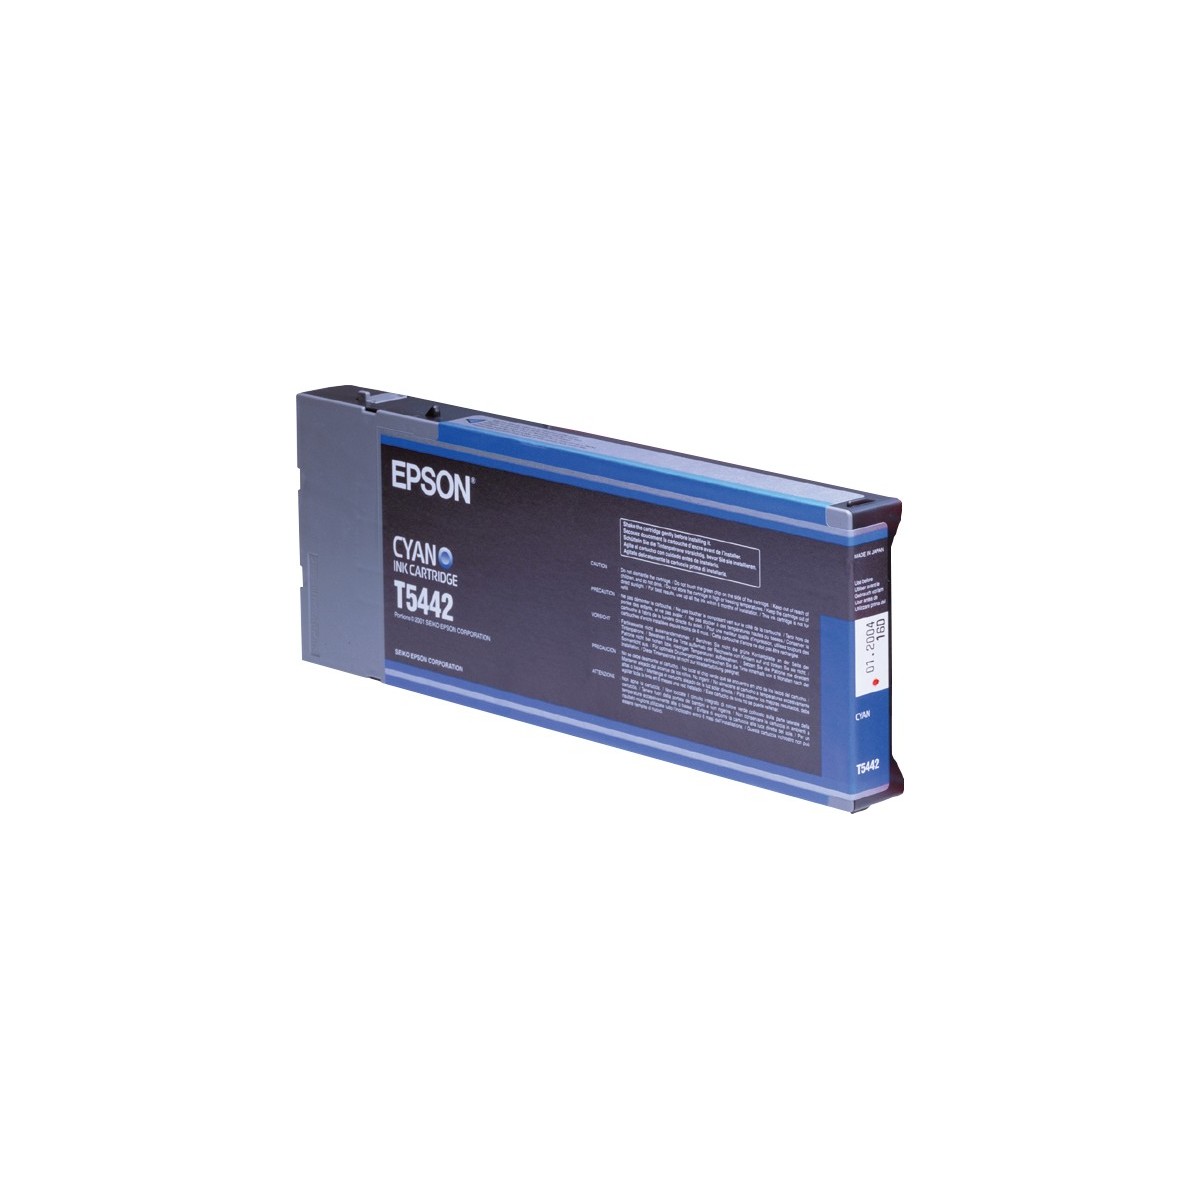 Epson Singlepack Cyan T544200 220 ml - Original - Cyan - Epson - Stylus Pro 4000/4400/7600/9600 - 1 pc(s) - Inkjet printing